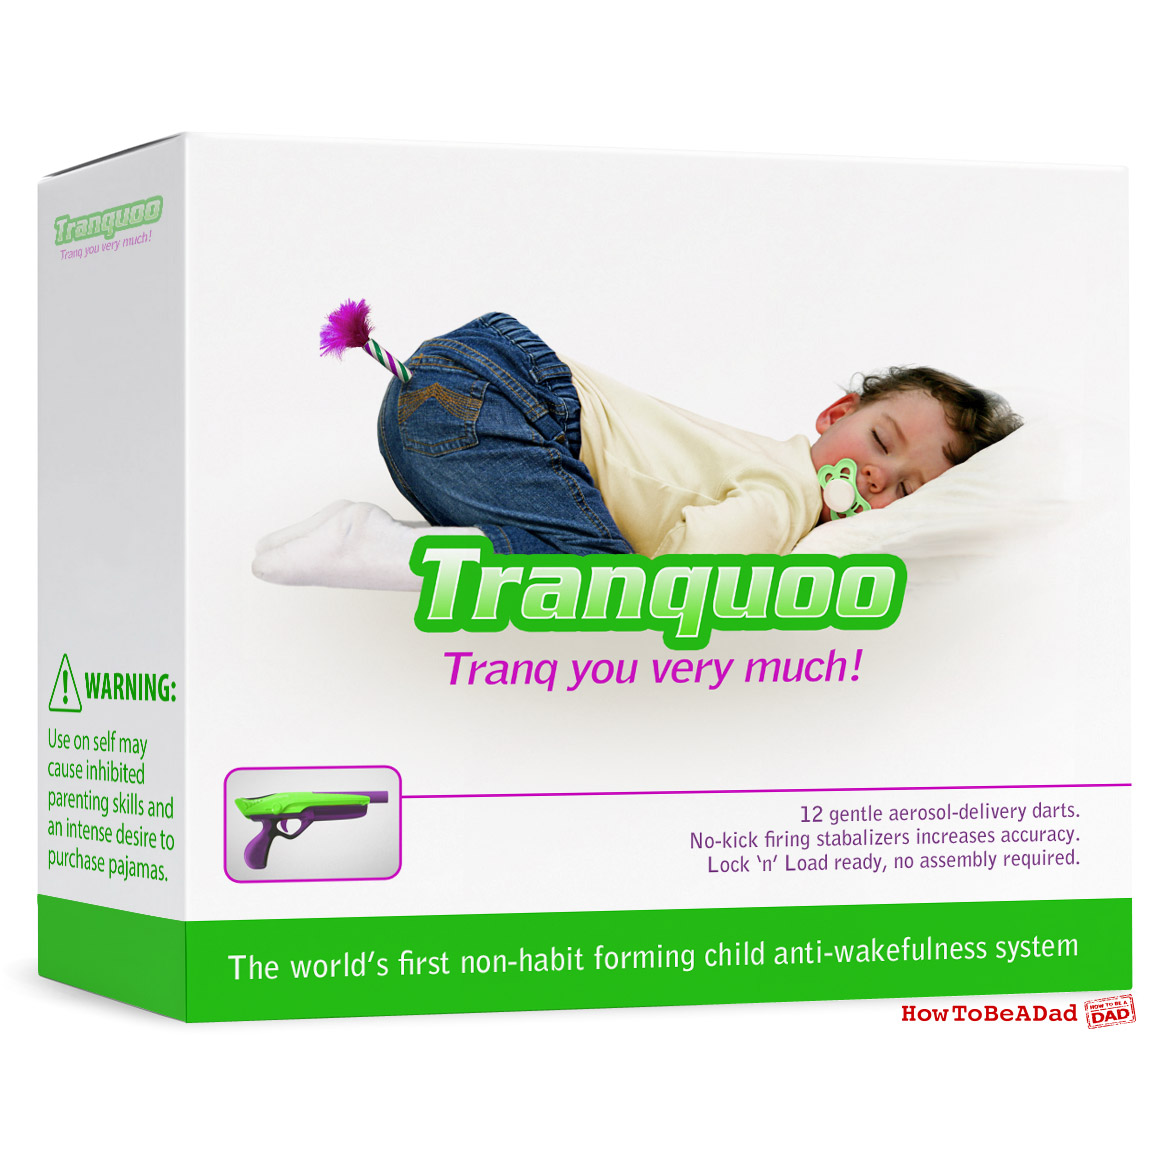 Tranquoo Anti-Wakefulness System funny bad baby product